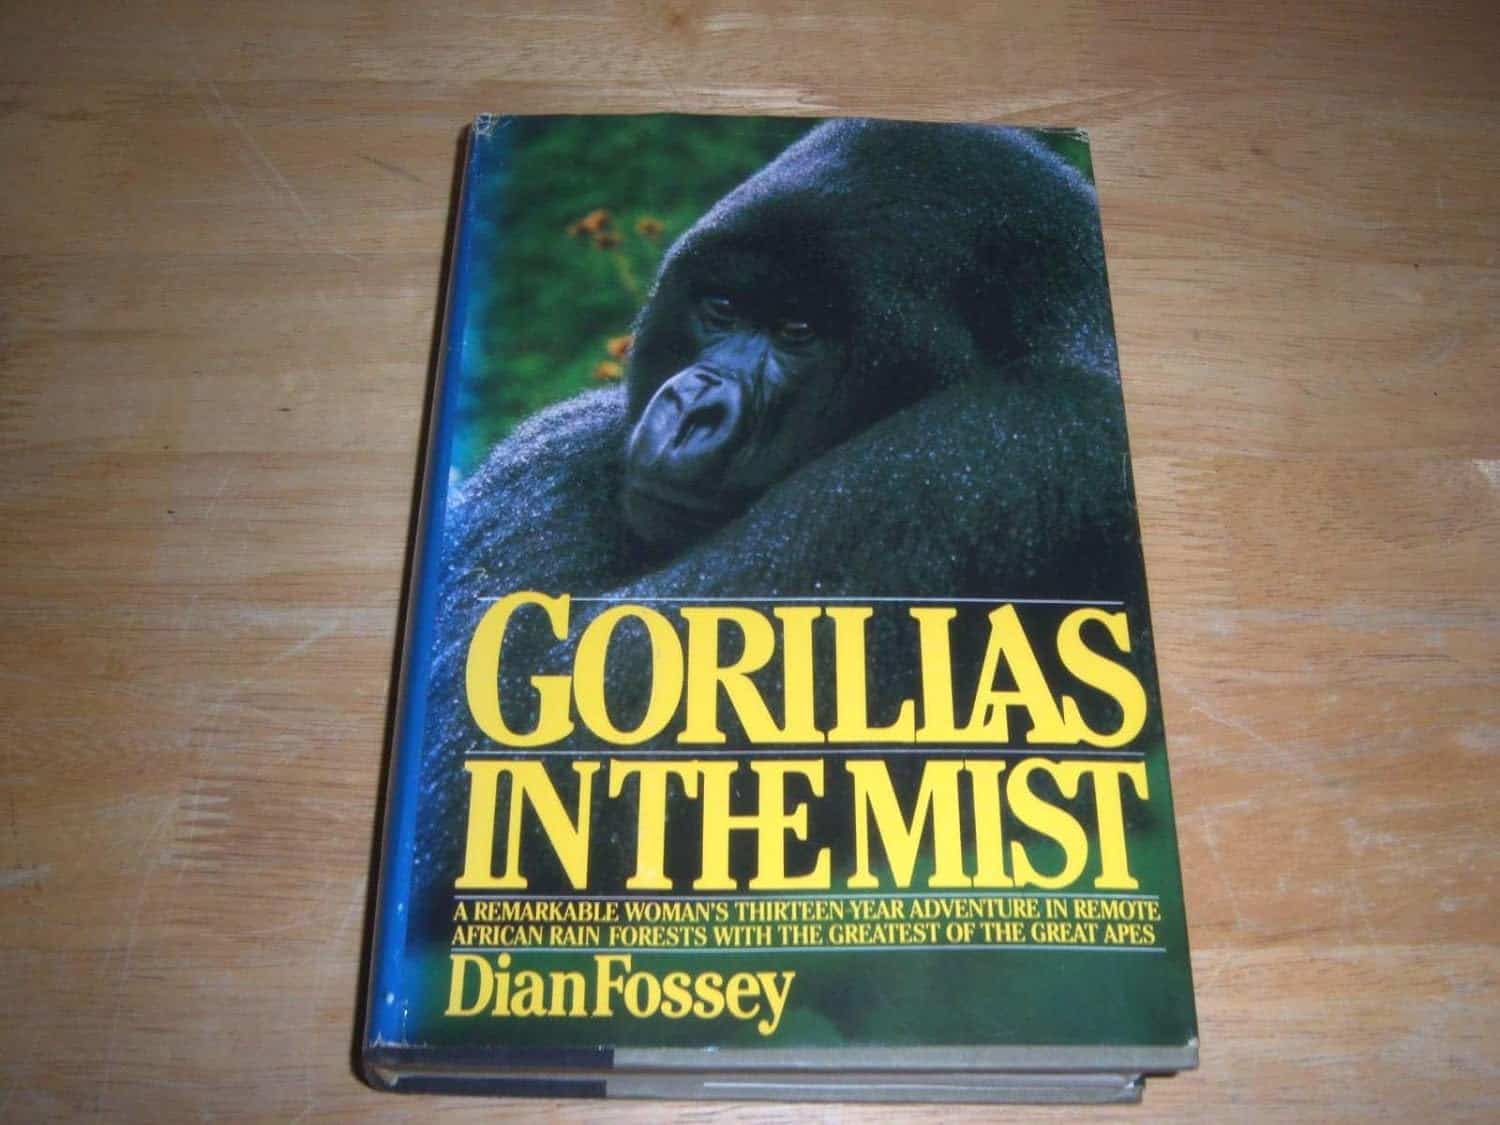 Gorillas in the Mist by Dian Fossey (1983)